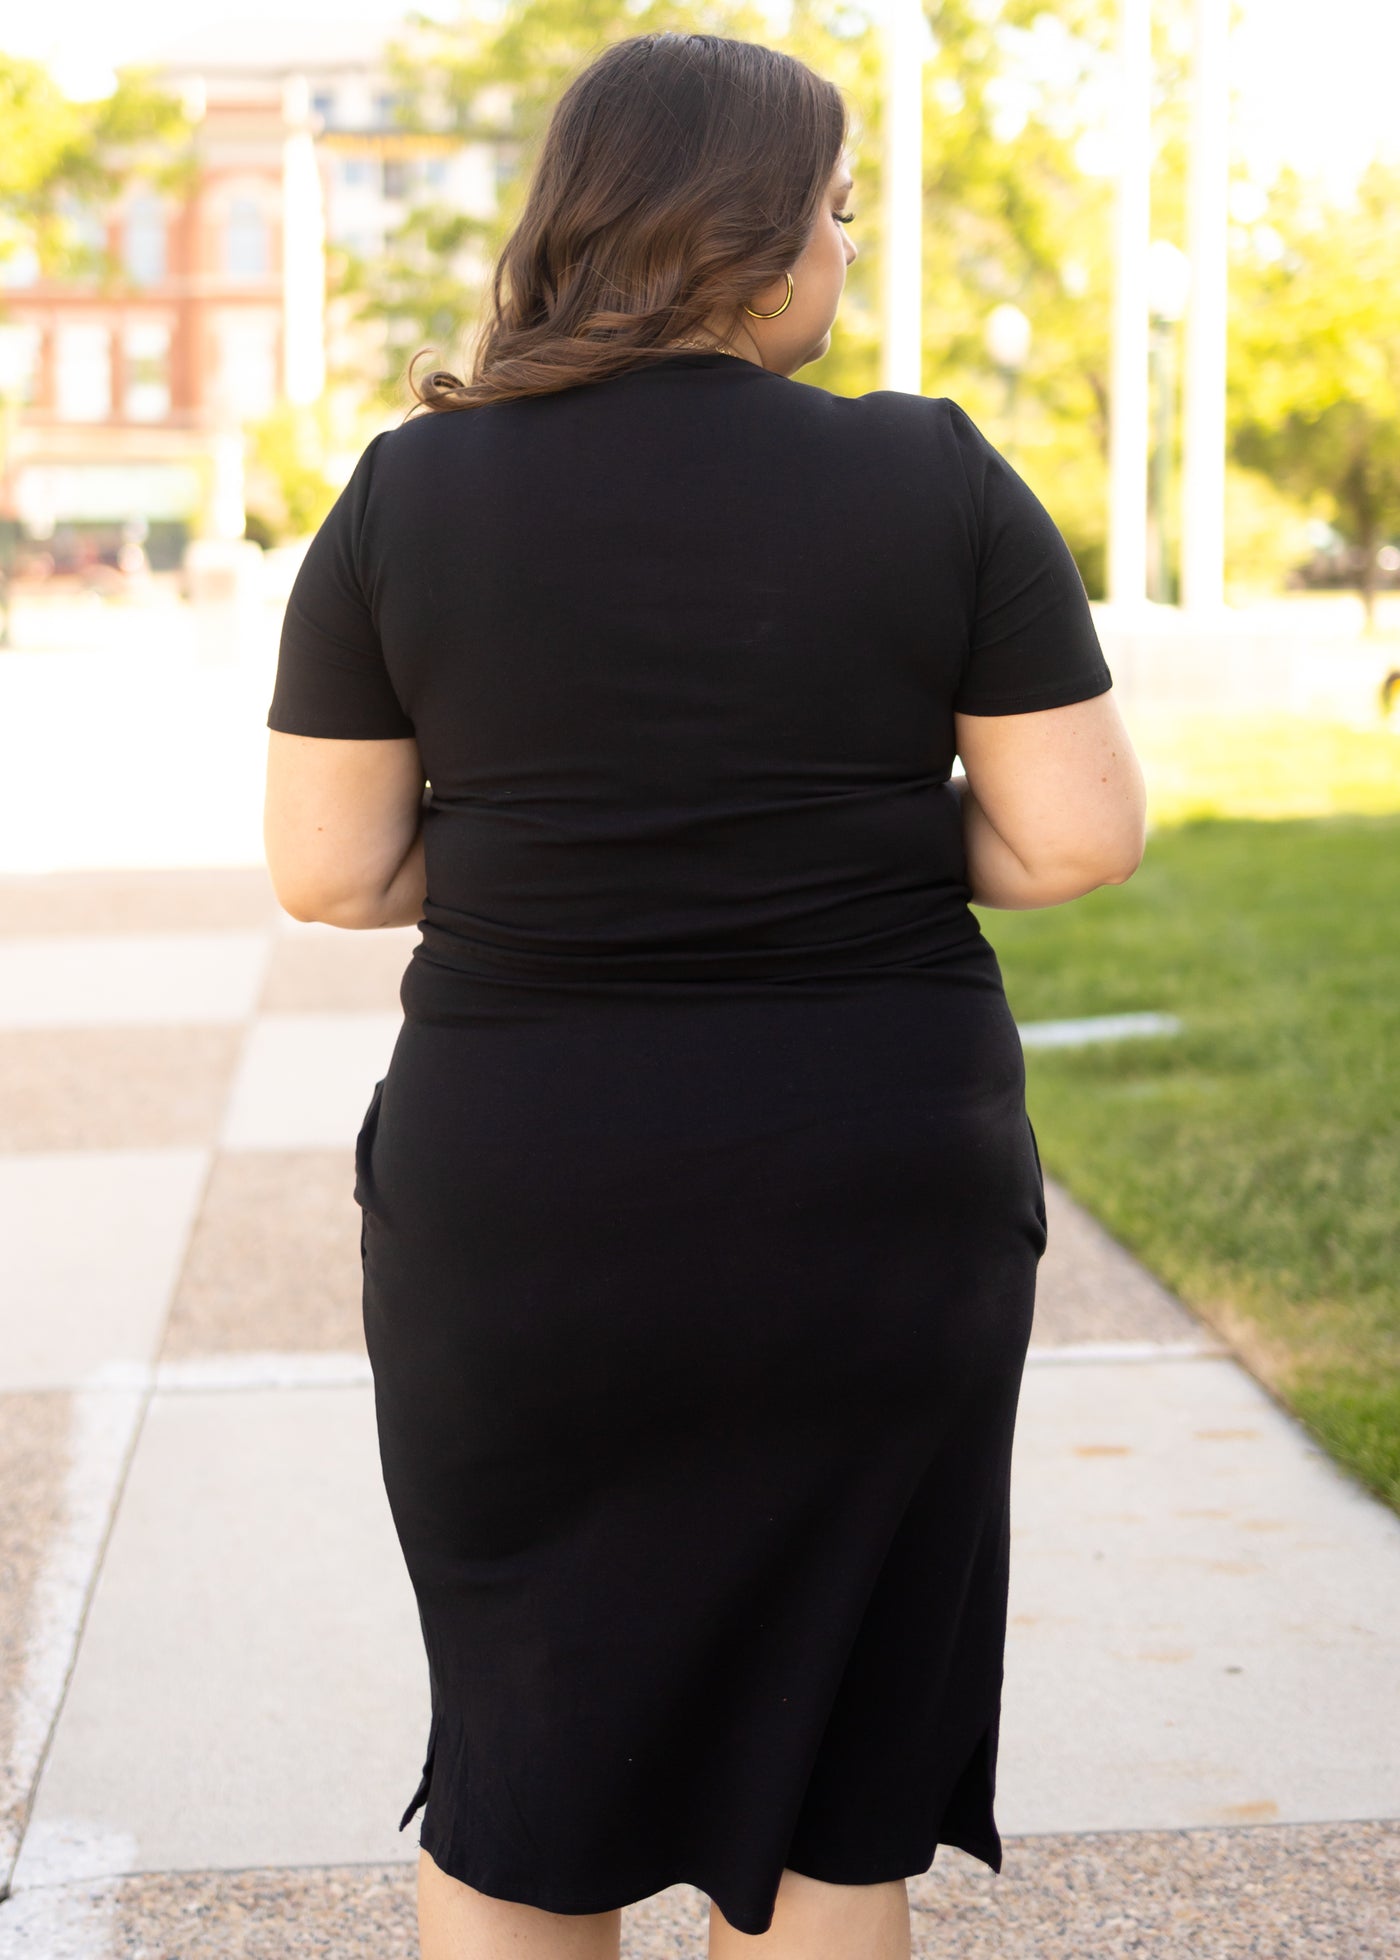 Back view of a knit black dress